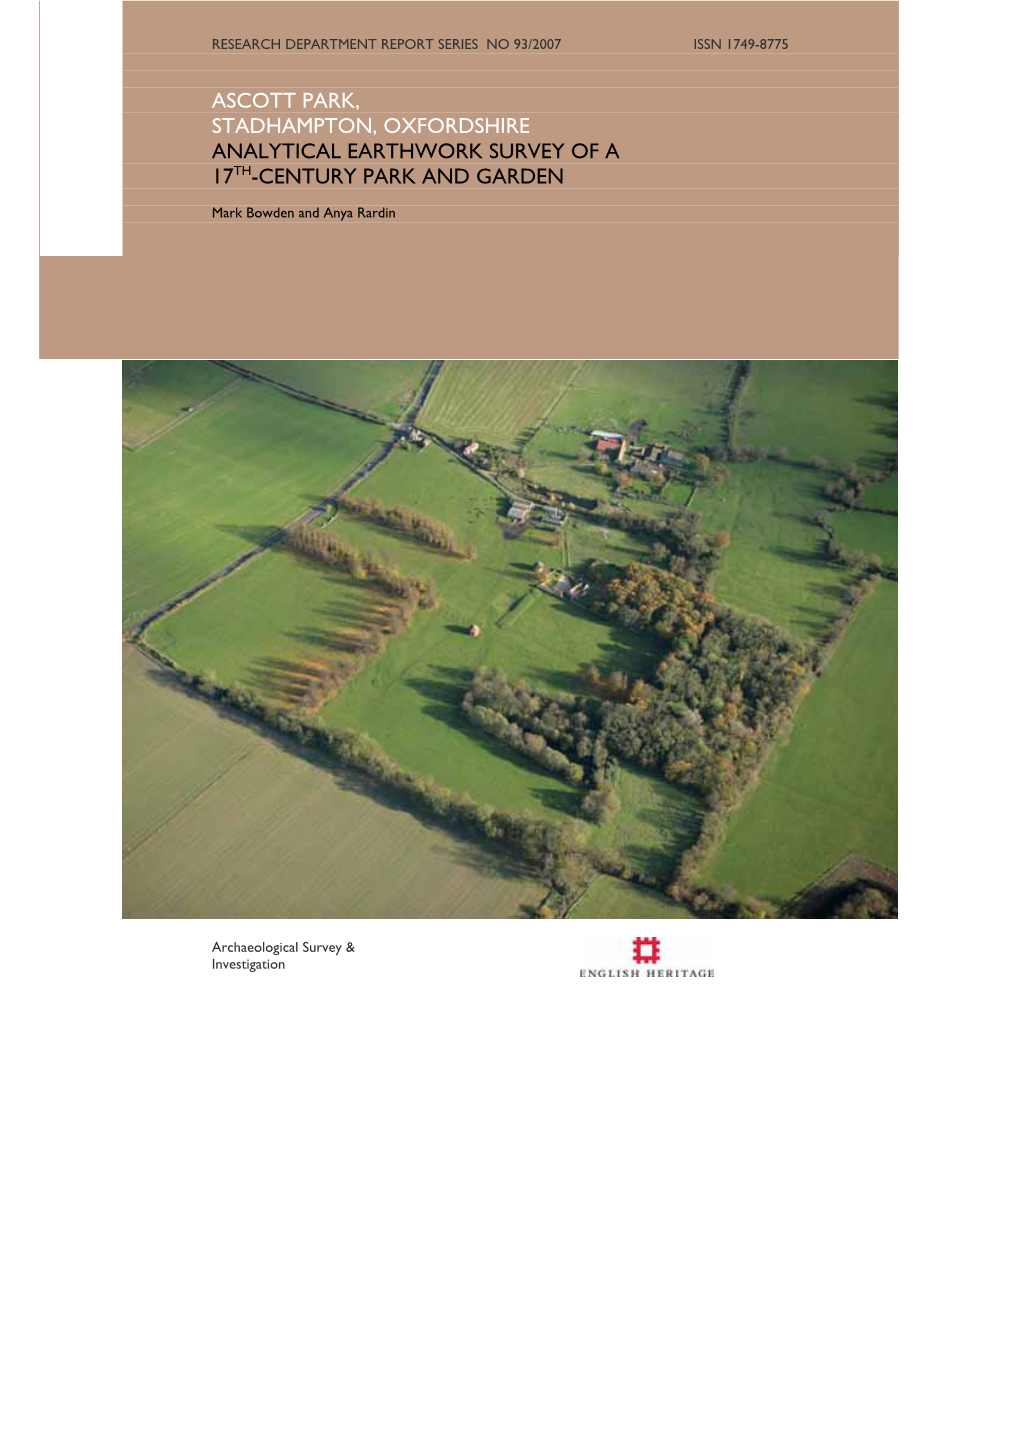 Ascott Park, Stadhampton, Oxfordshire Analytical Earthwork Survey of a 17Th-Century Park and Garden